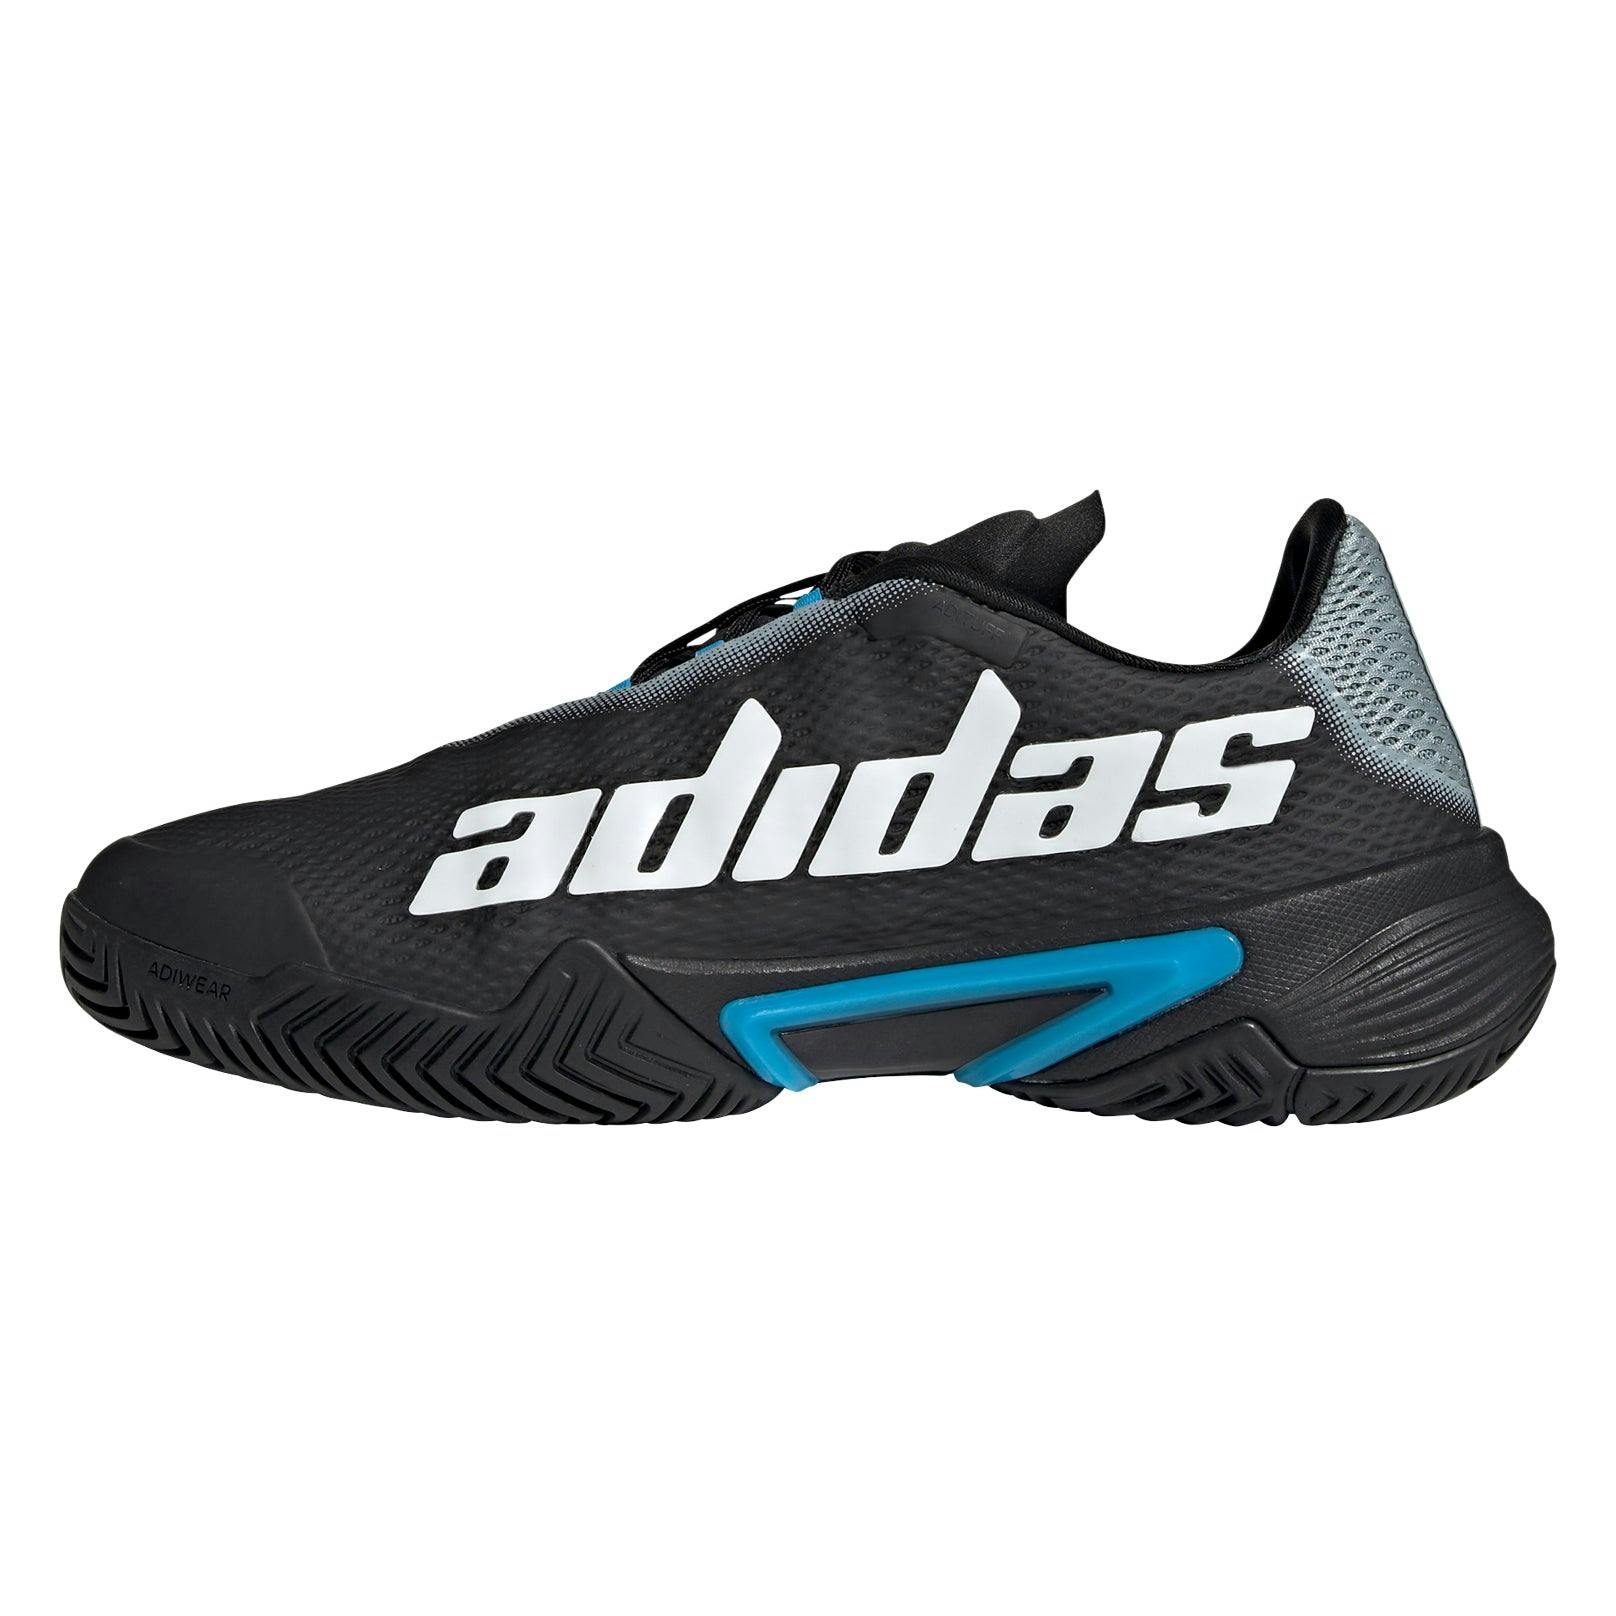 Adidas Barricade Grey Mens Tennis Shoes - GRY/WHT/BLK 037 / D Medium / 12.5